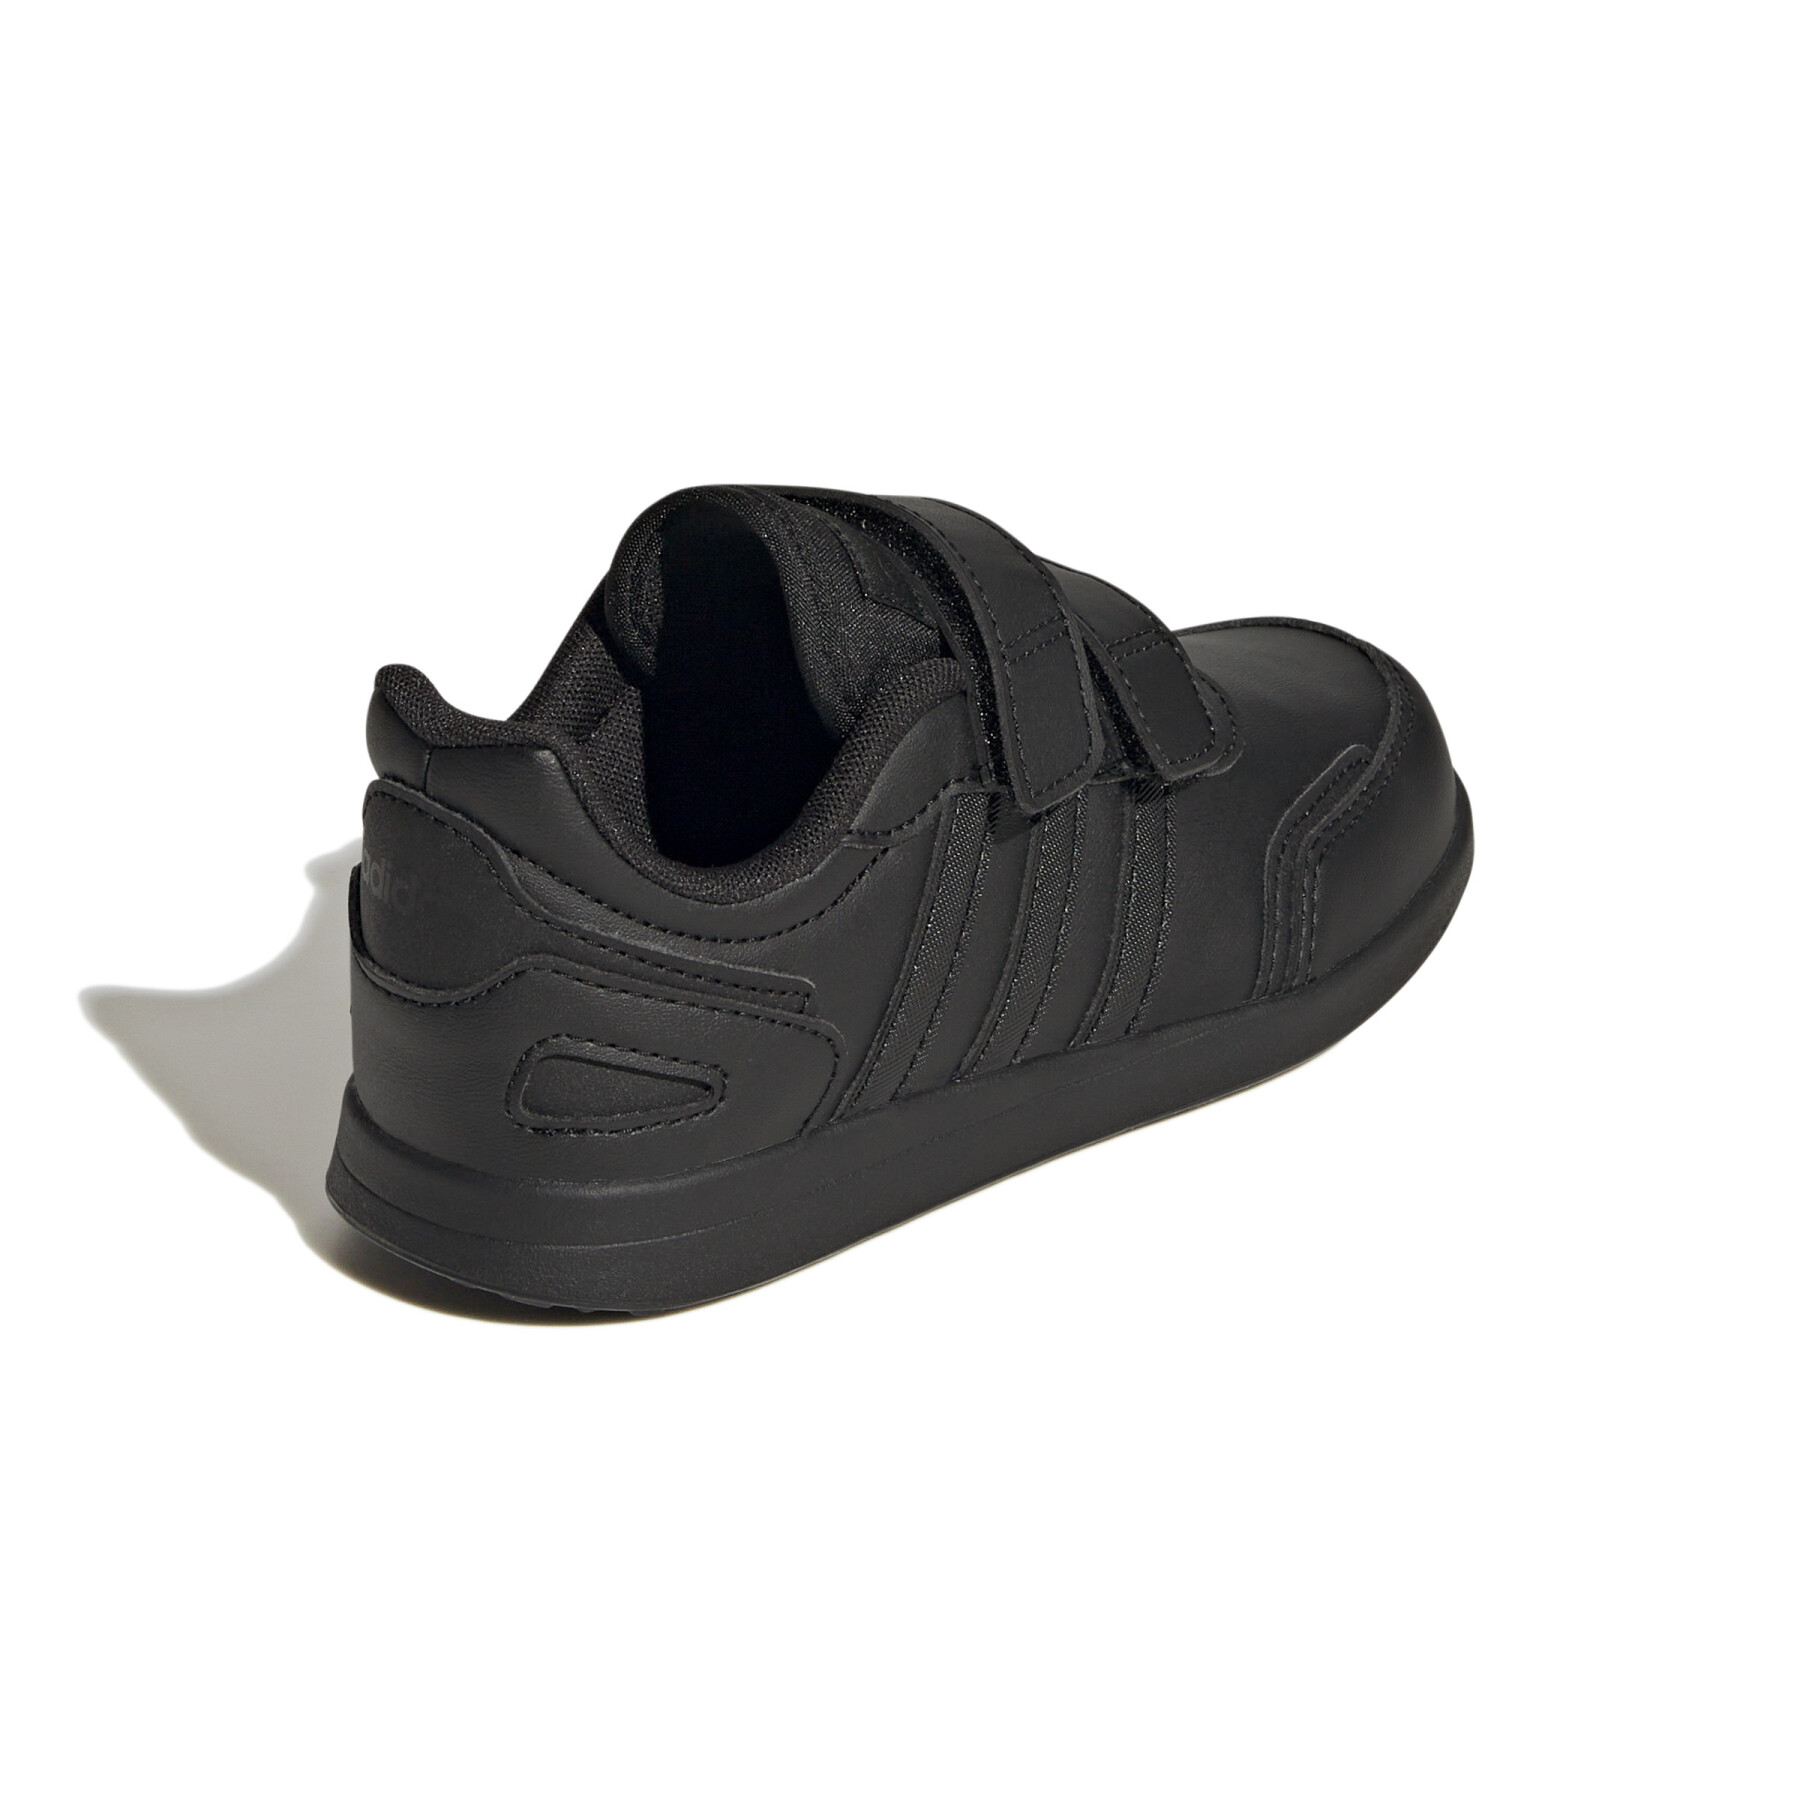 Children's sneakers adidas Vs Switch 3 C